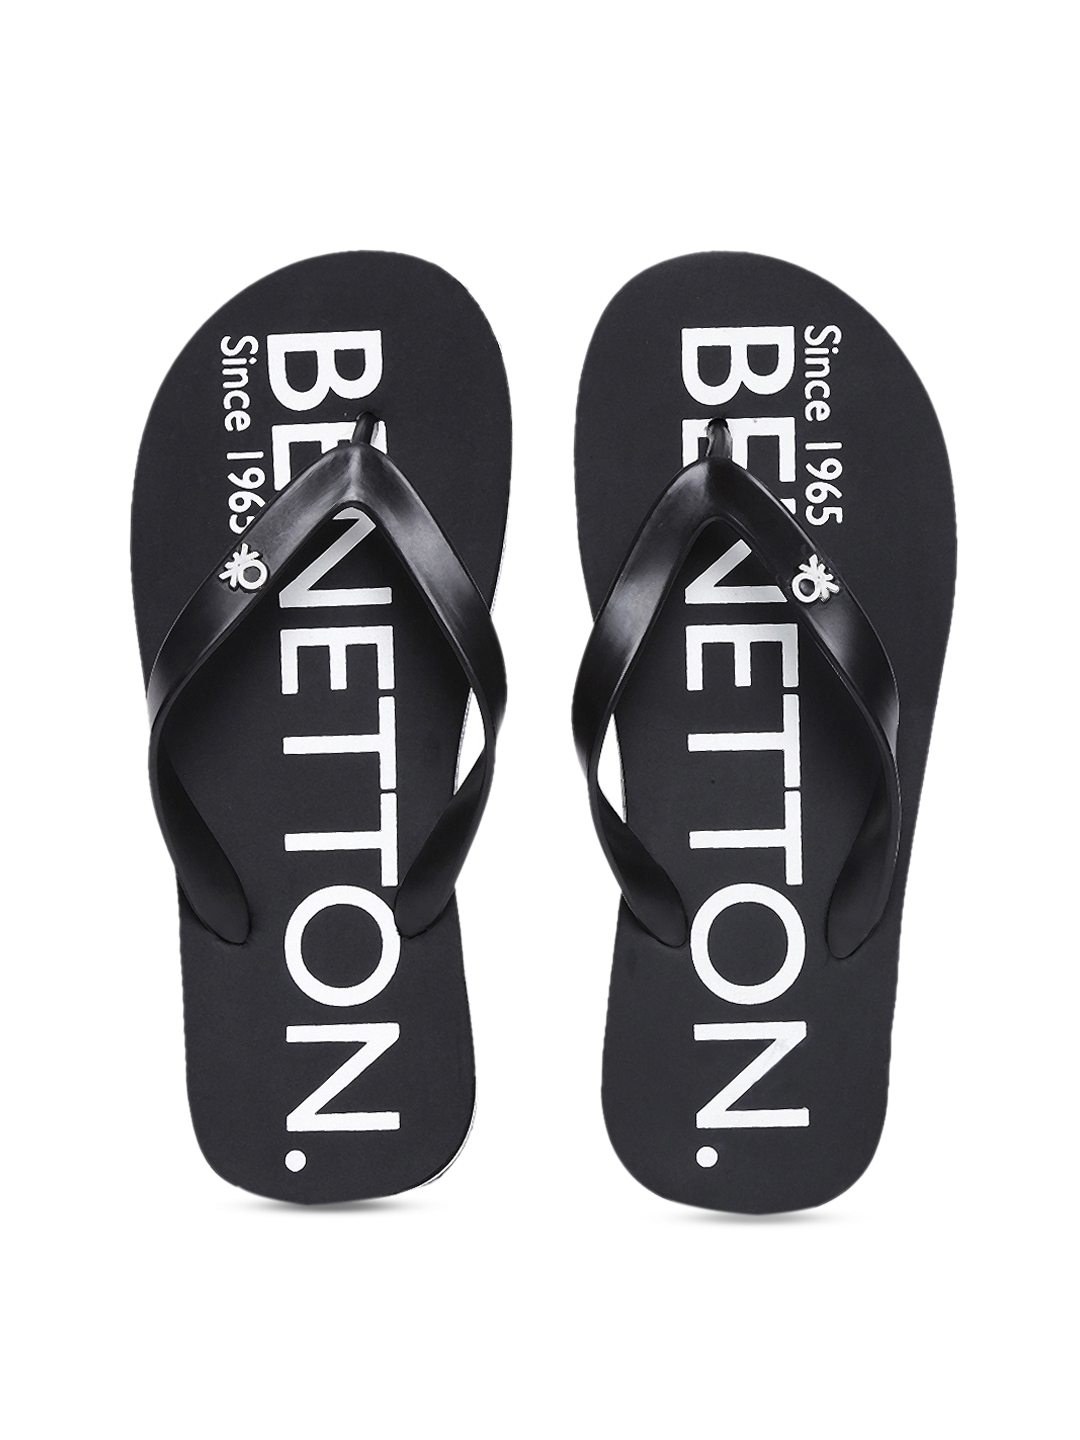 benetton slippers myntra